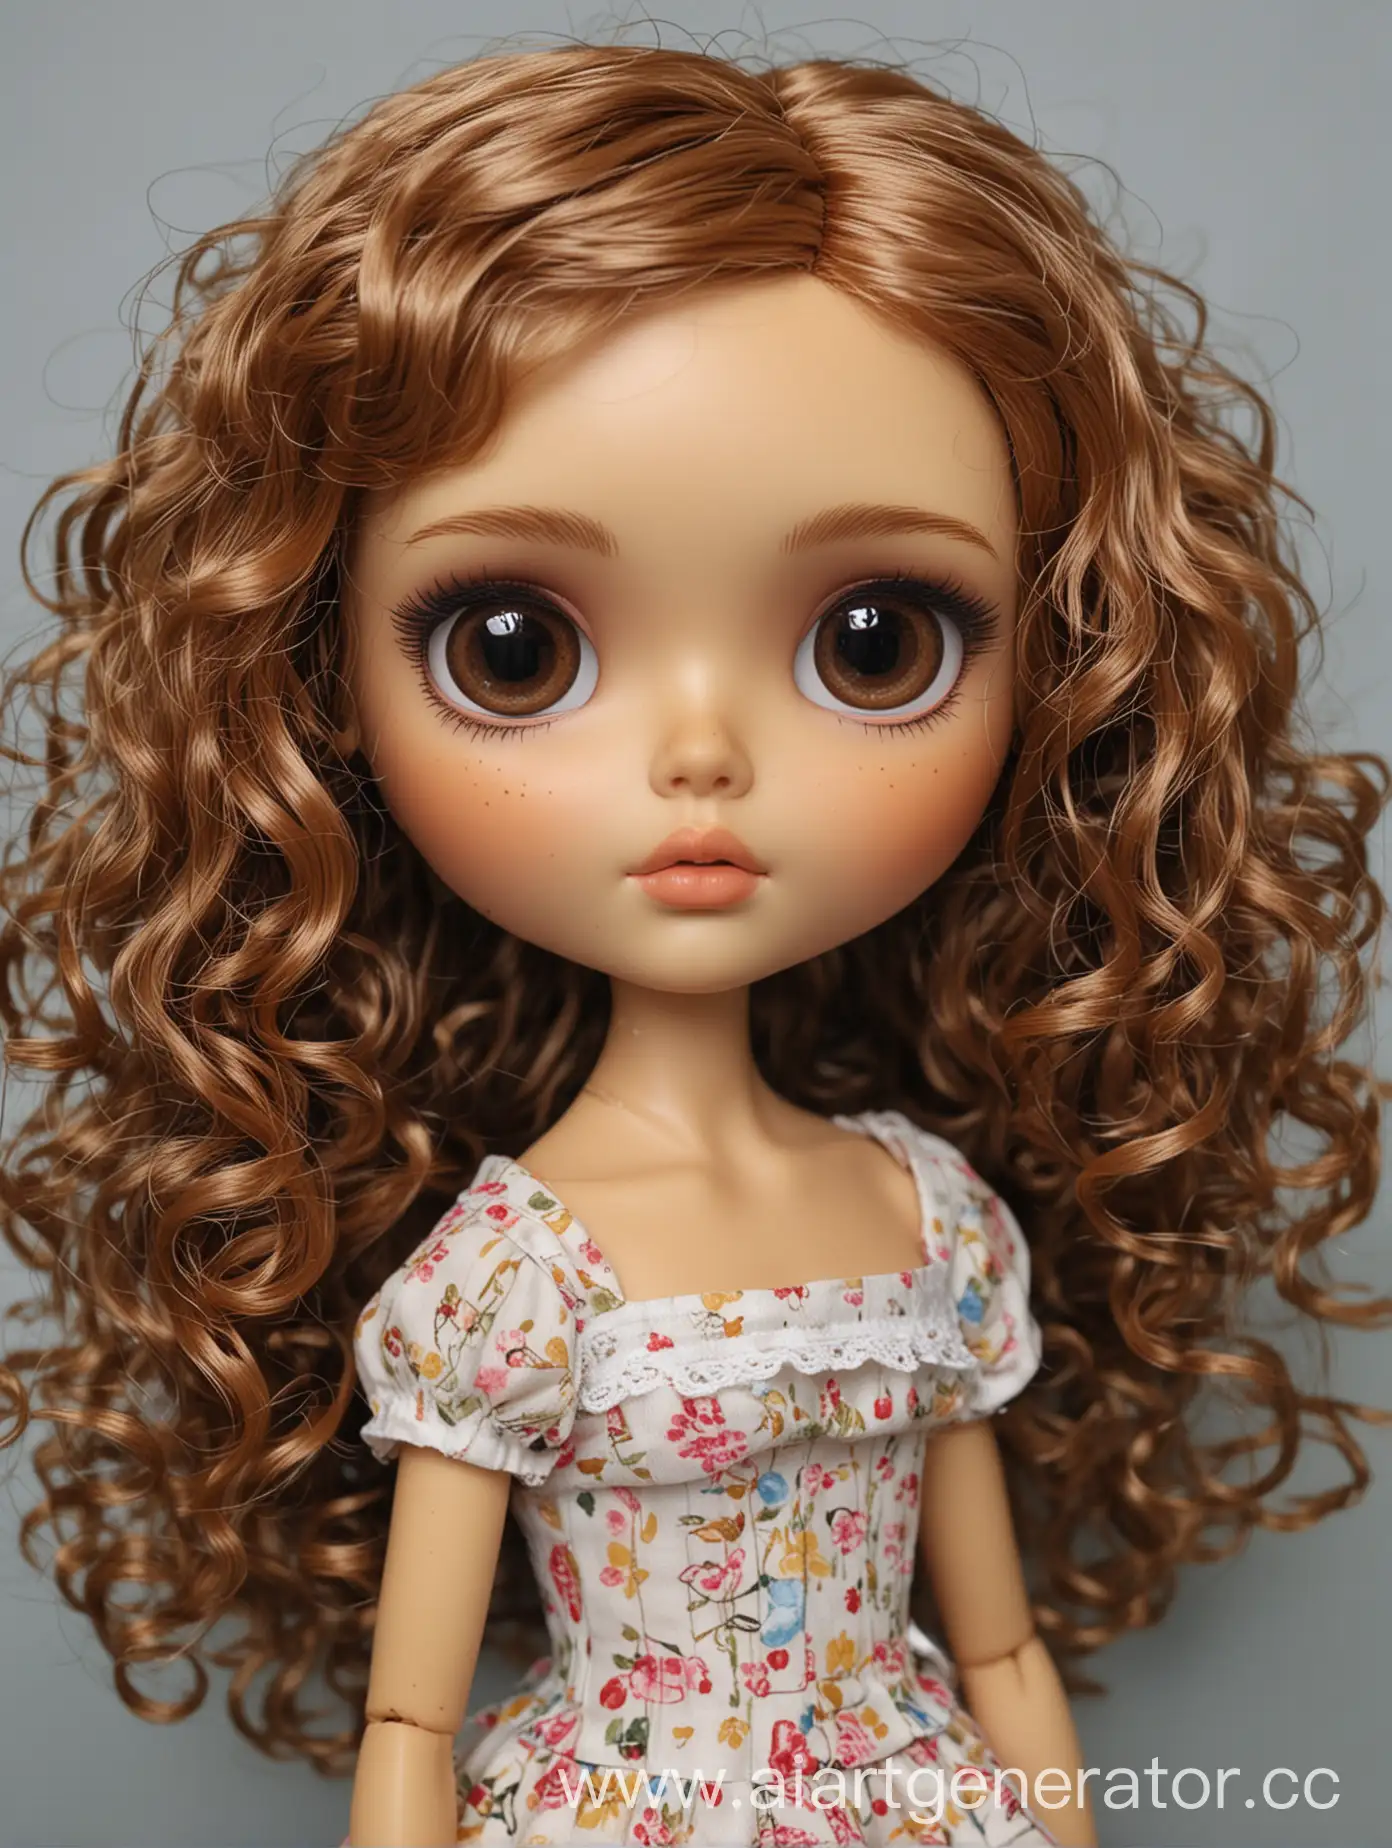 Medium-Curly-Hair-Blythe-Doll-with-Brown-Eyes